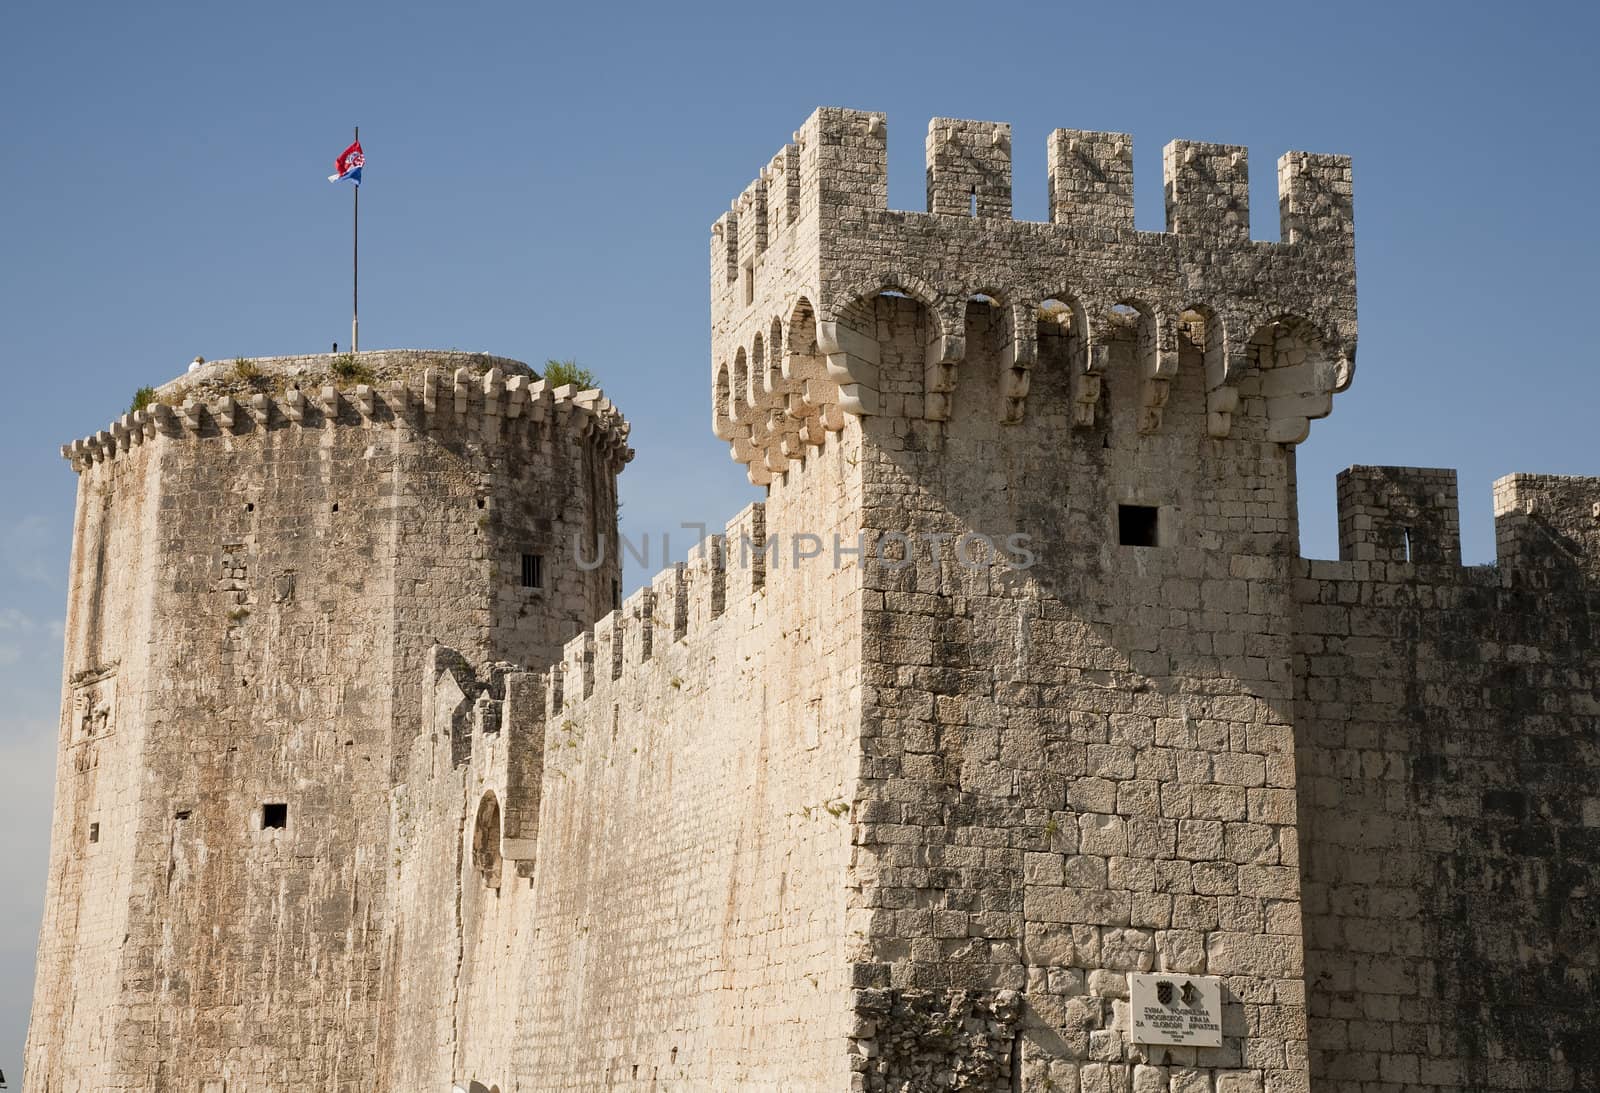 Ancient castle of Trogir, Croatia by the Adriatic Sea. UNESCO World Heritage.